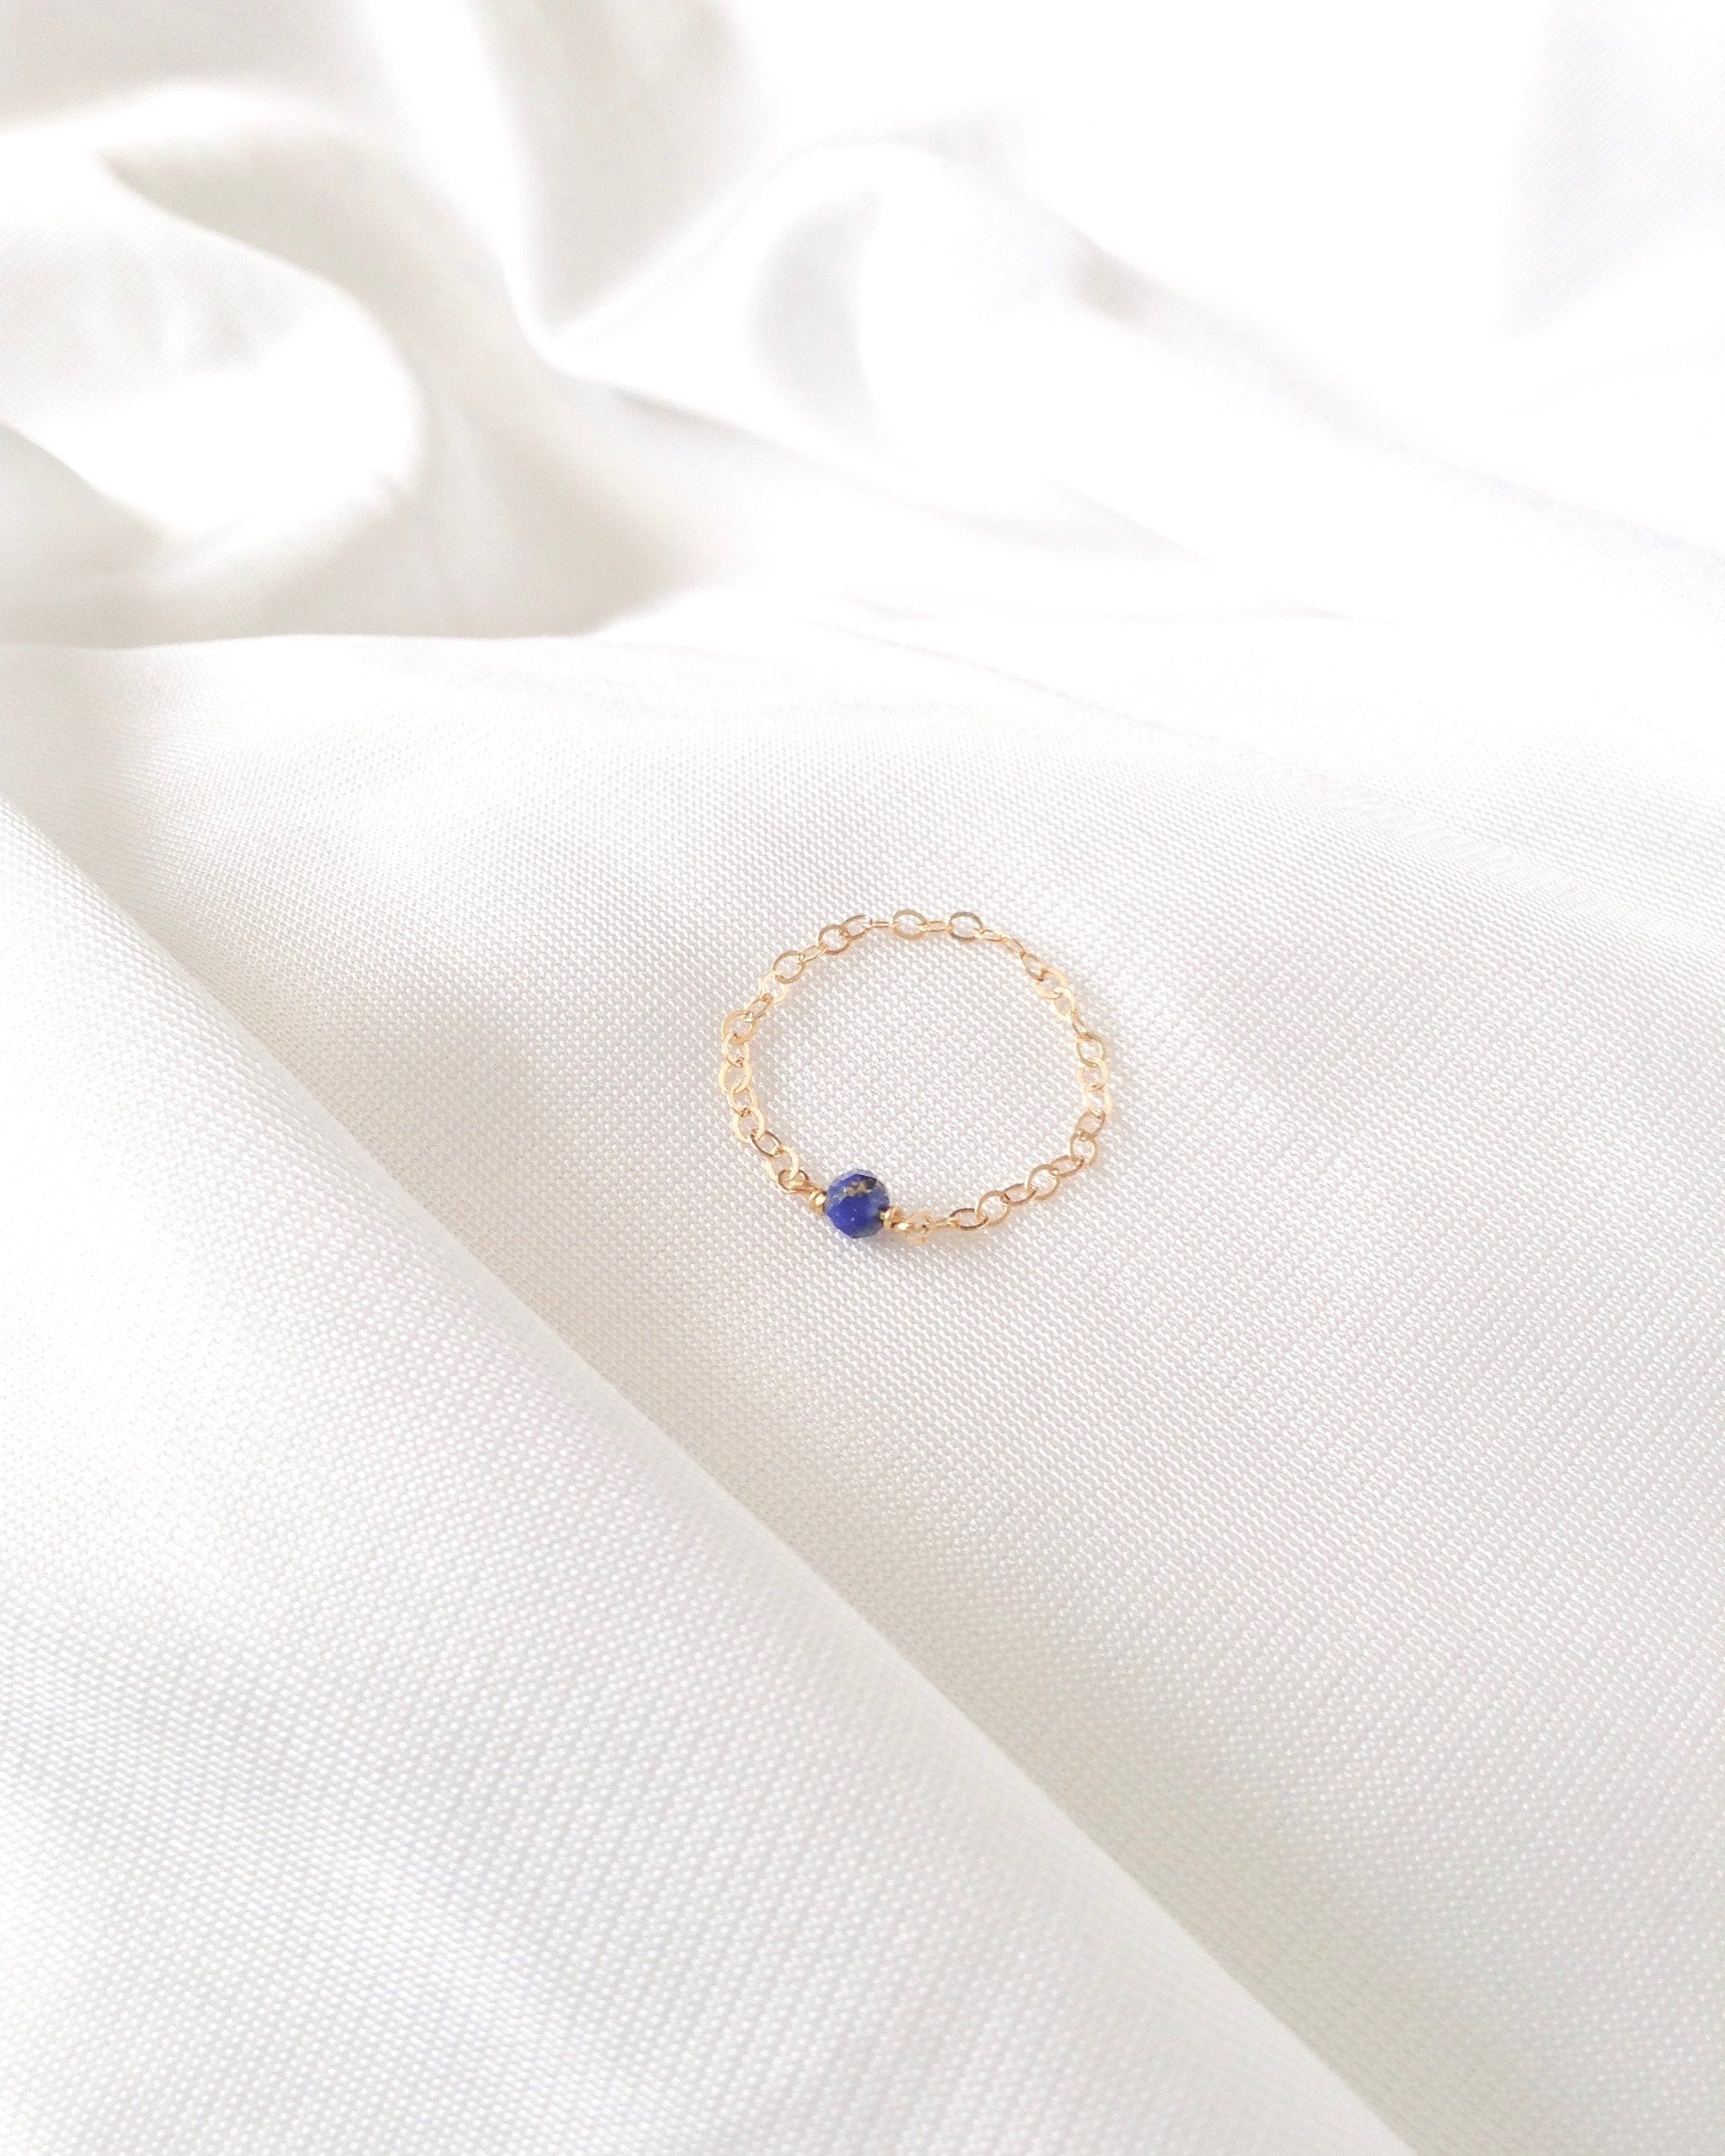 Lapis Lazuli Delicate Gemstone Ring | Dainty Ring | IB Jewelry